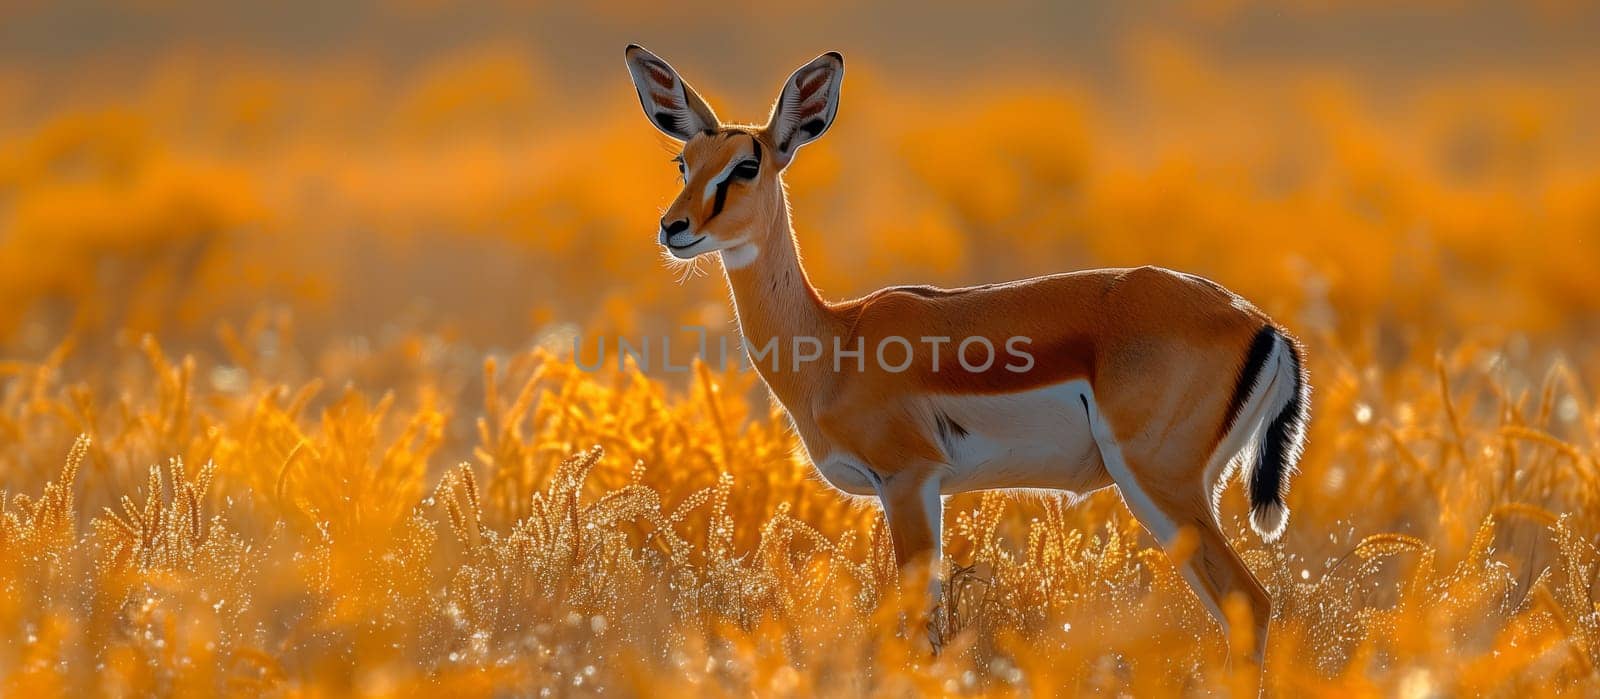 Deer in grassy Ecoregion, natural landscape, terrestrial animal in plain by richwolf